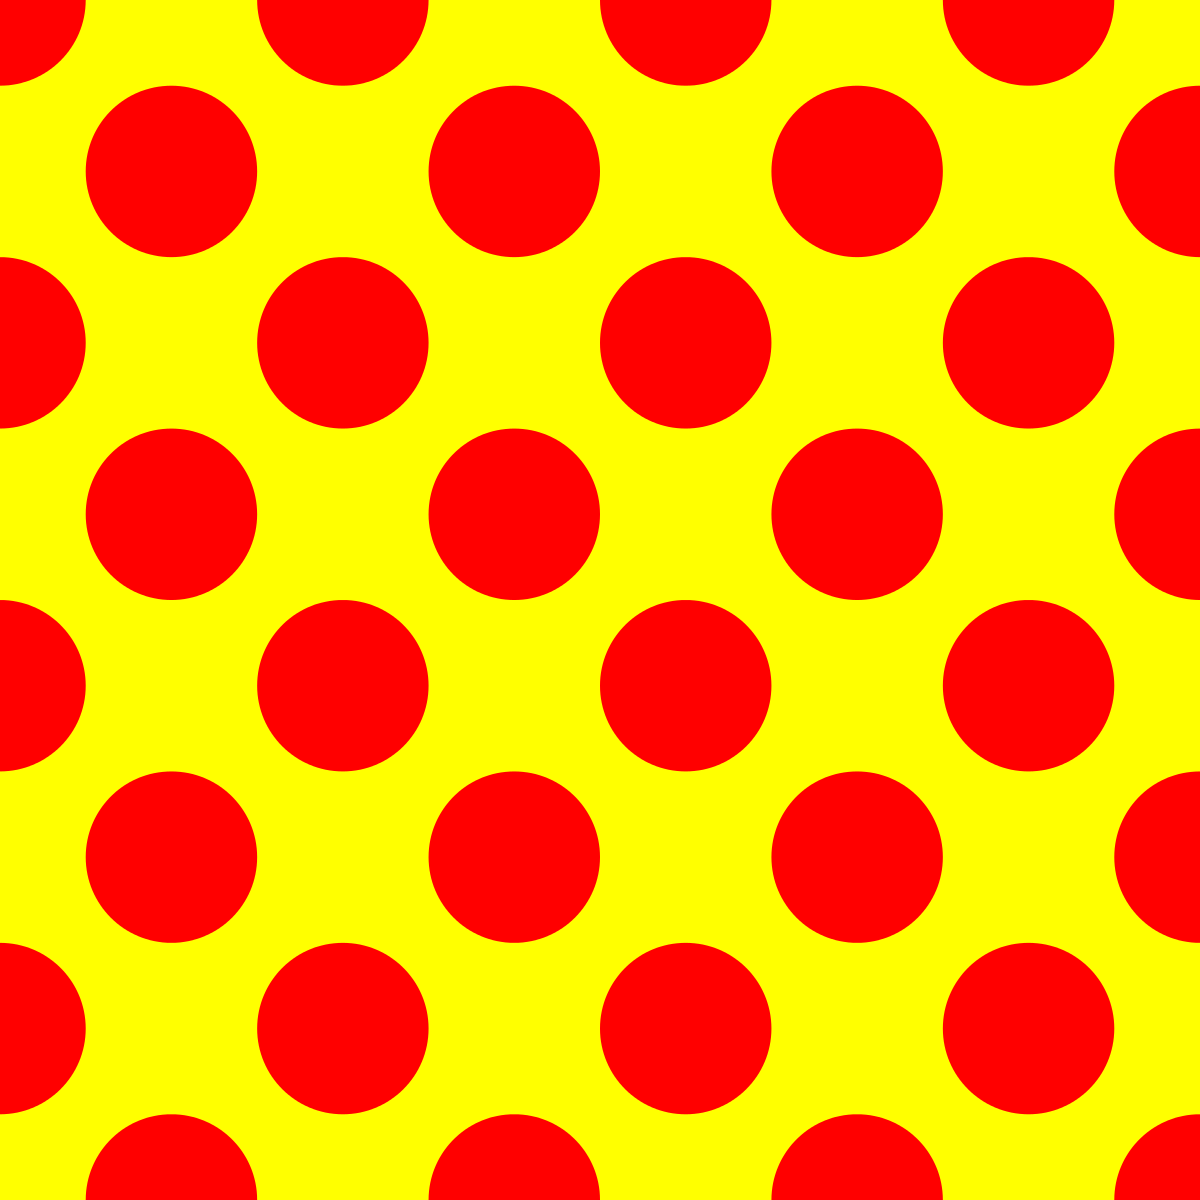 Orange and Yellow Dots with Red Circle Logo - Polka dot